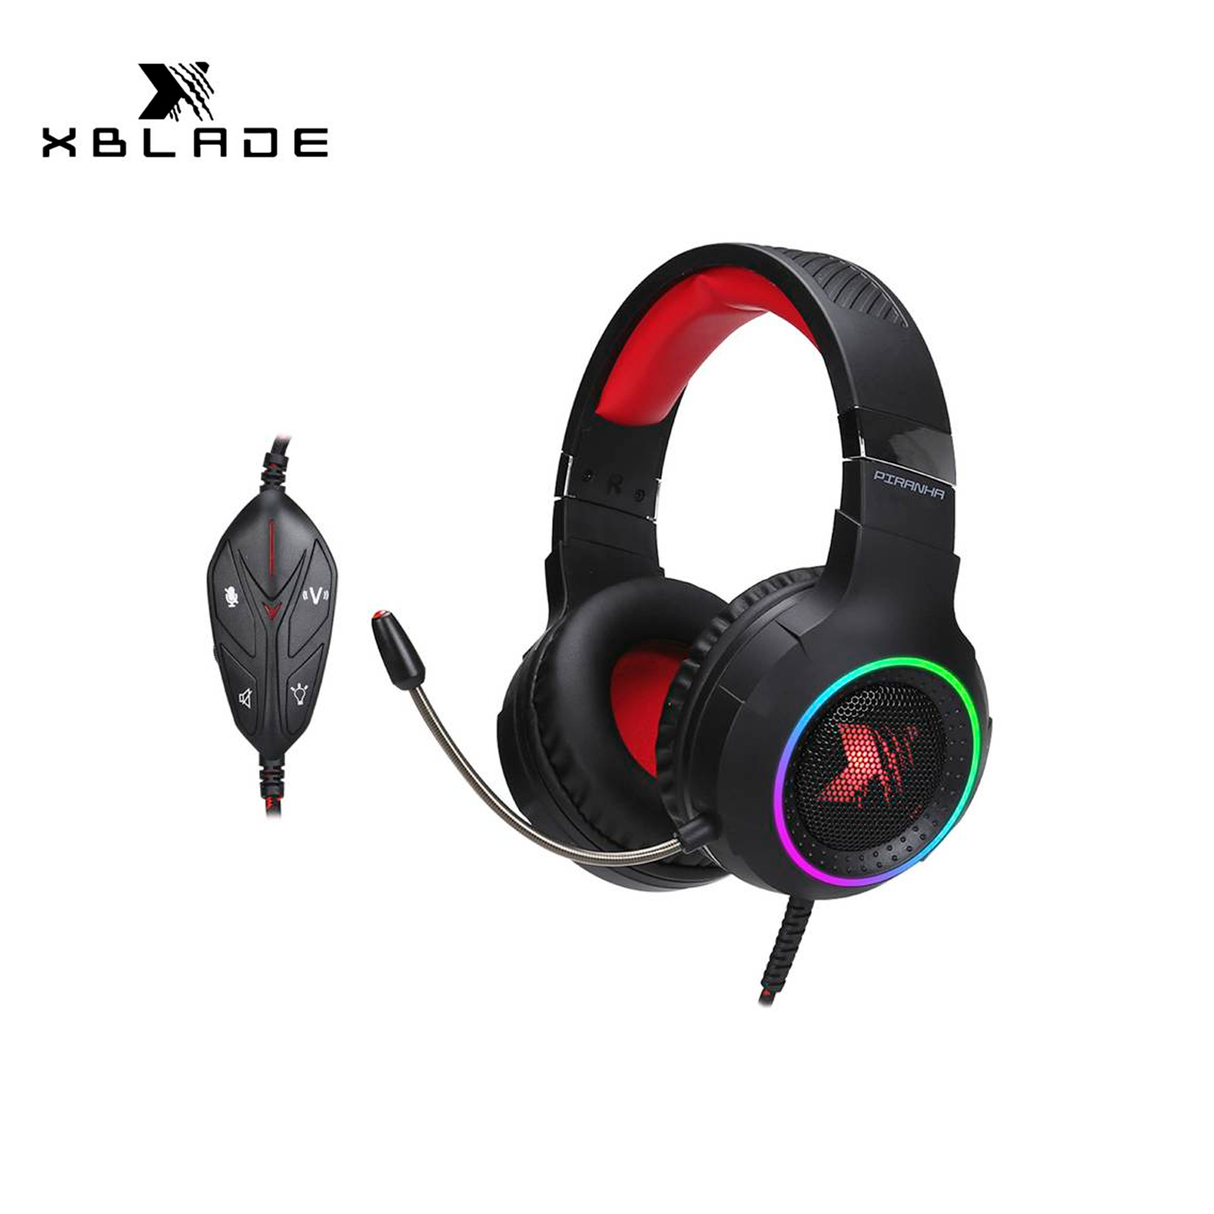 Audífono C/Micrófono Xblade Gaming Piranha RGB